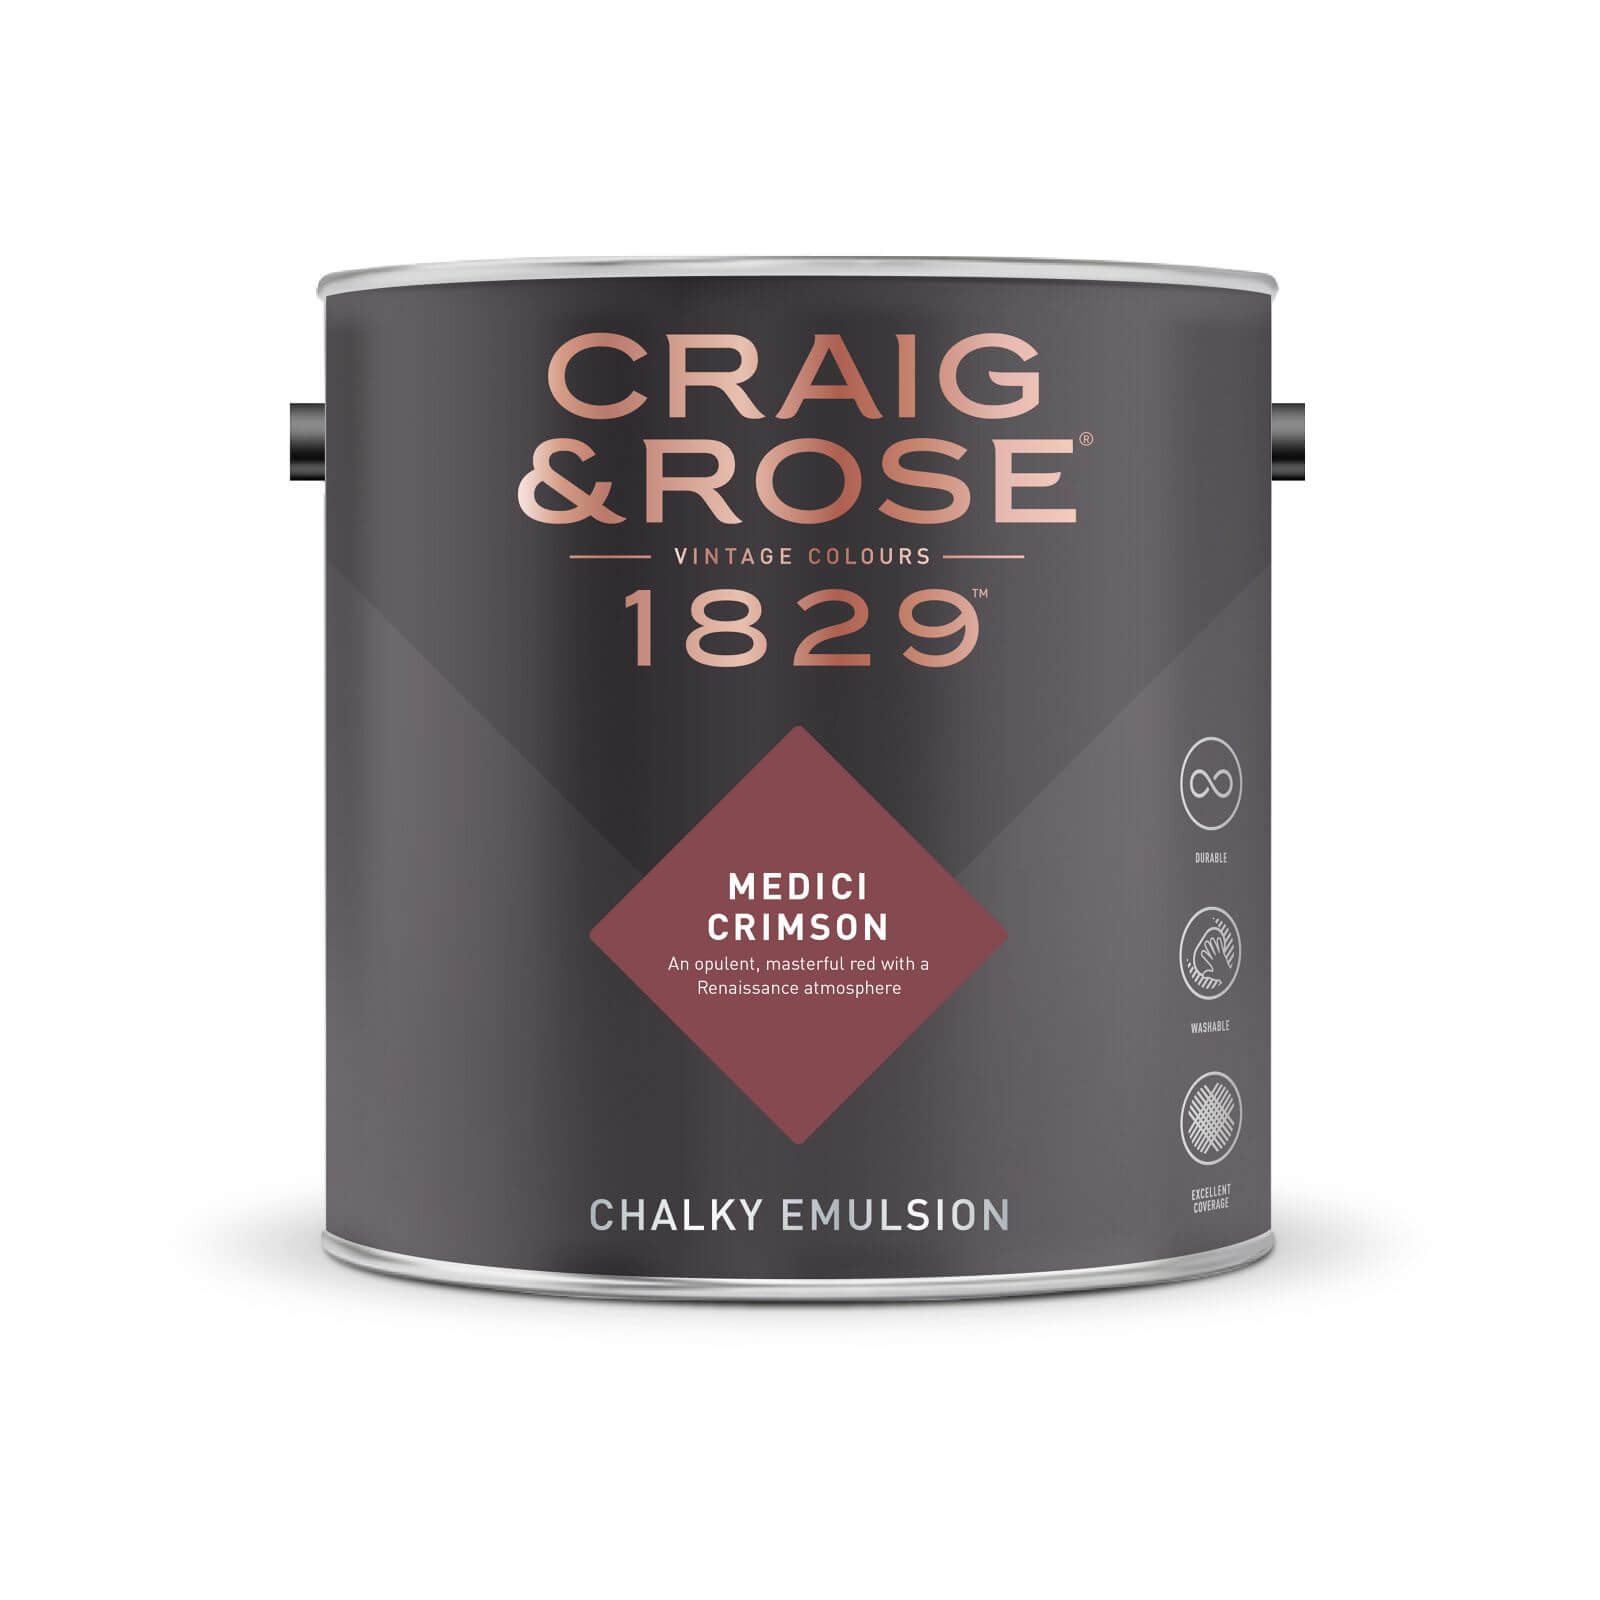 Craig & Rose 1829 Chalky Emulsion Paint Medici Crimson - Tester 50ml